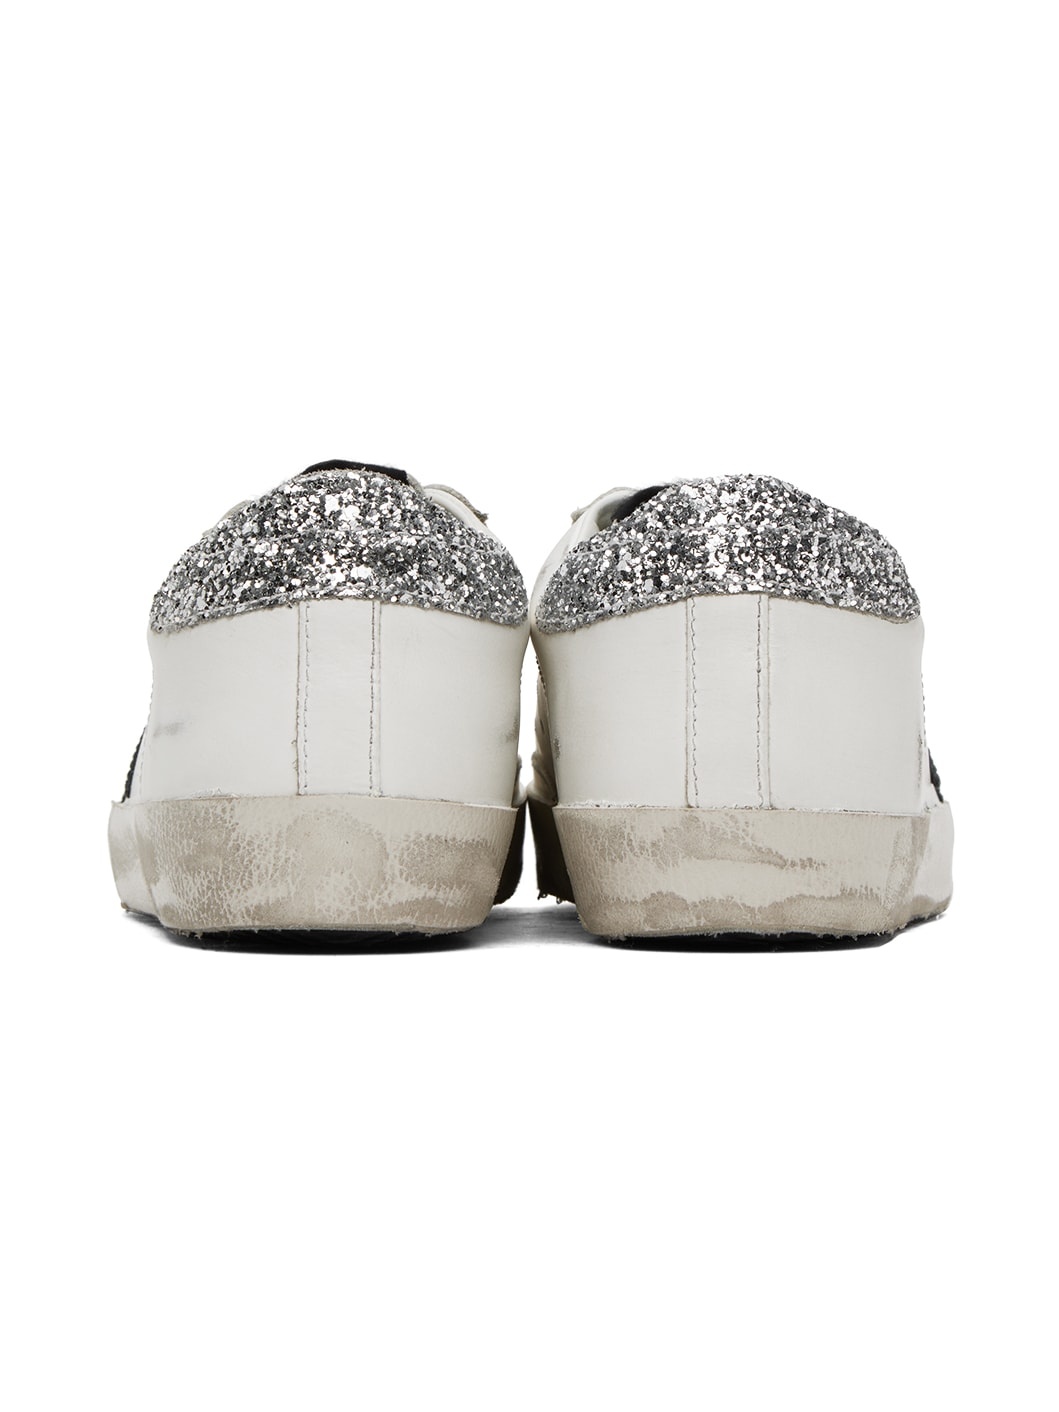 SSENSE Exclusive White Super-Star Sneakers - 2